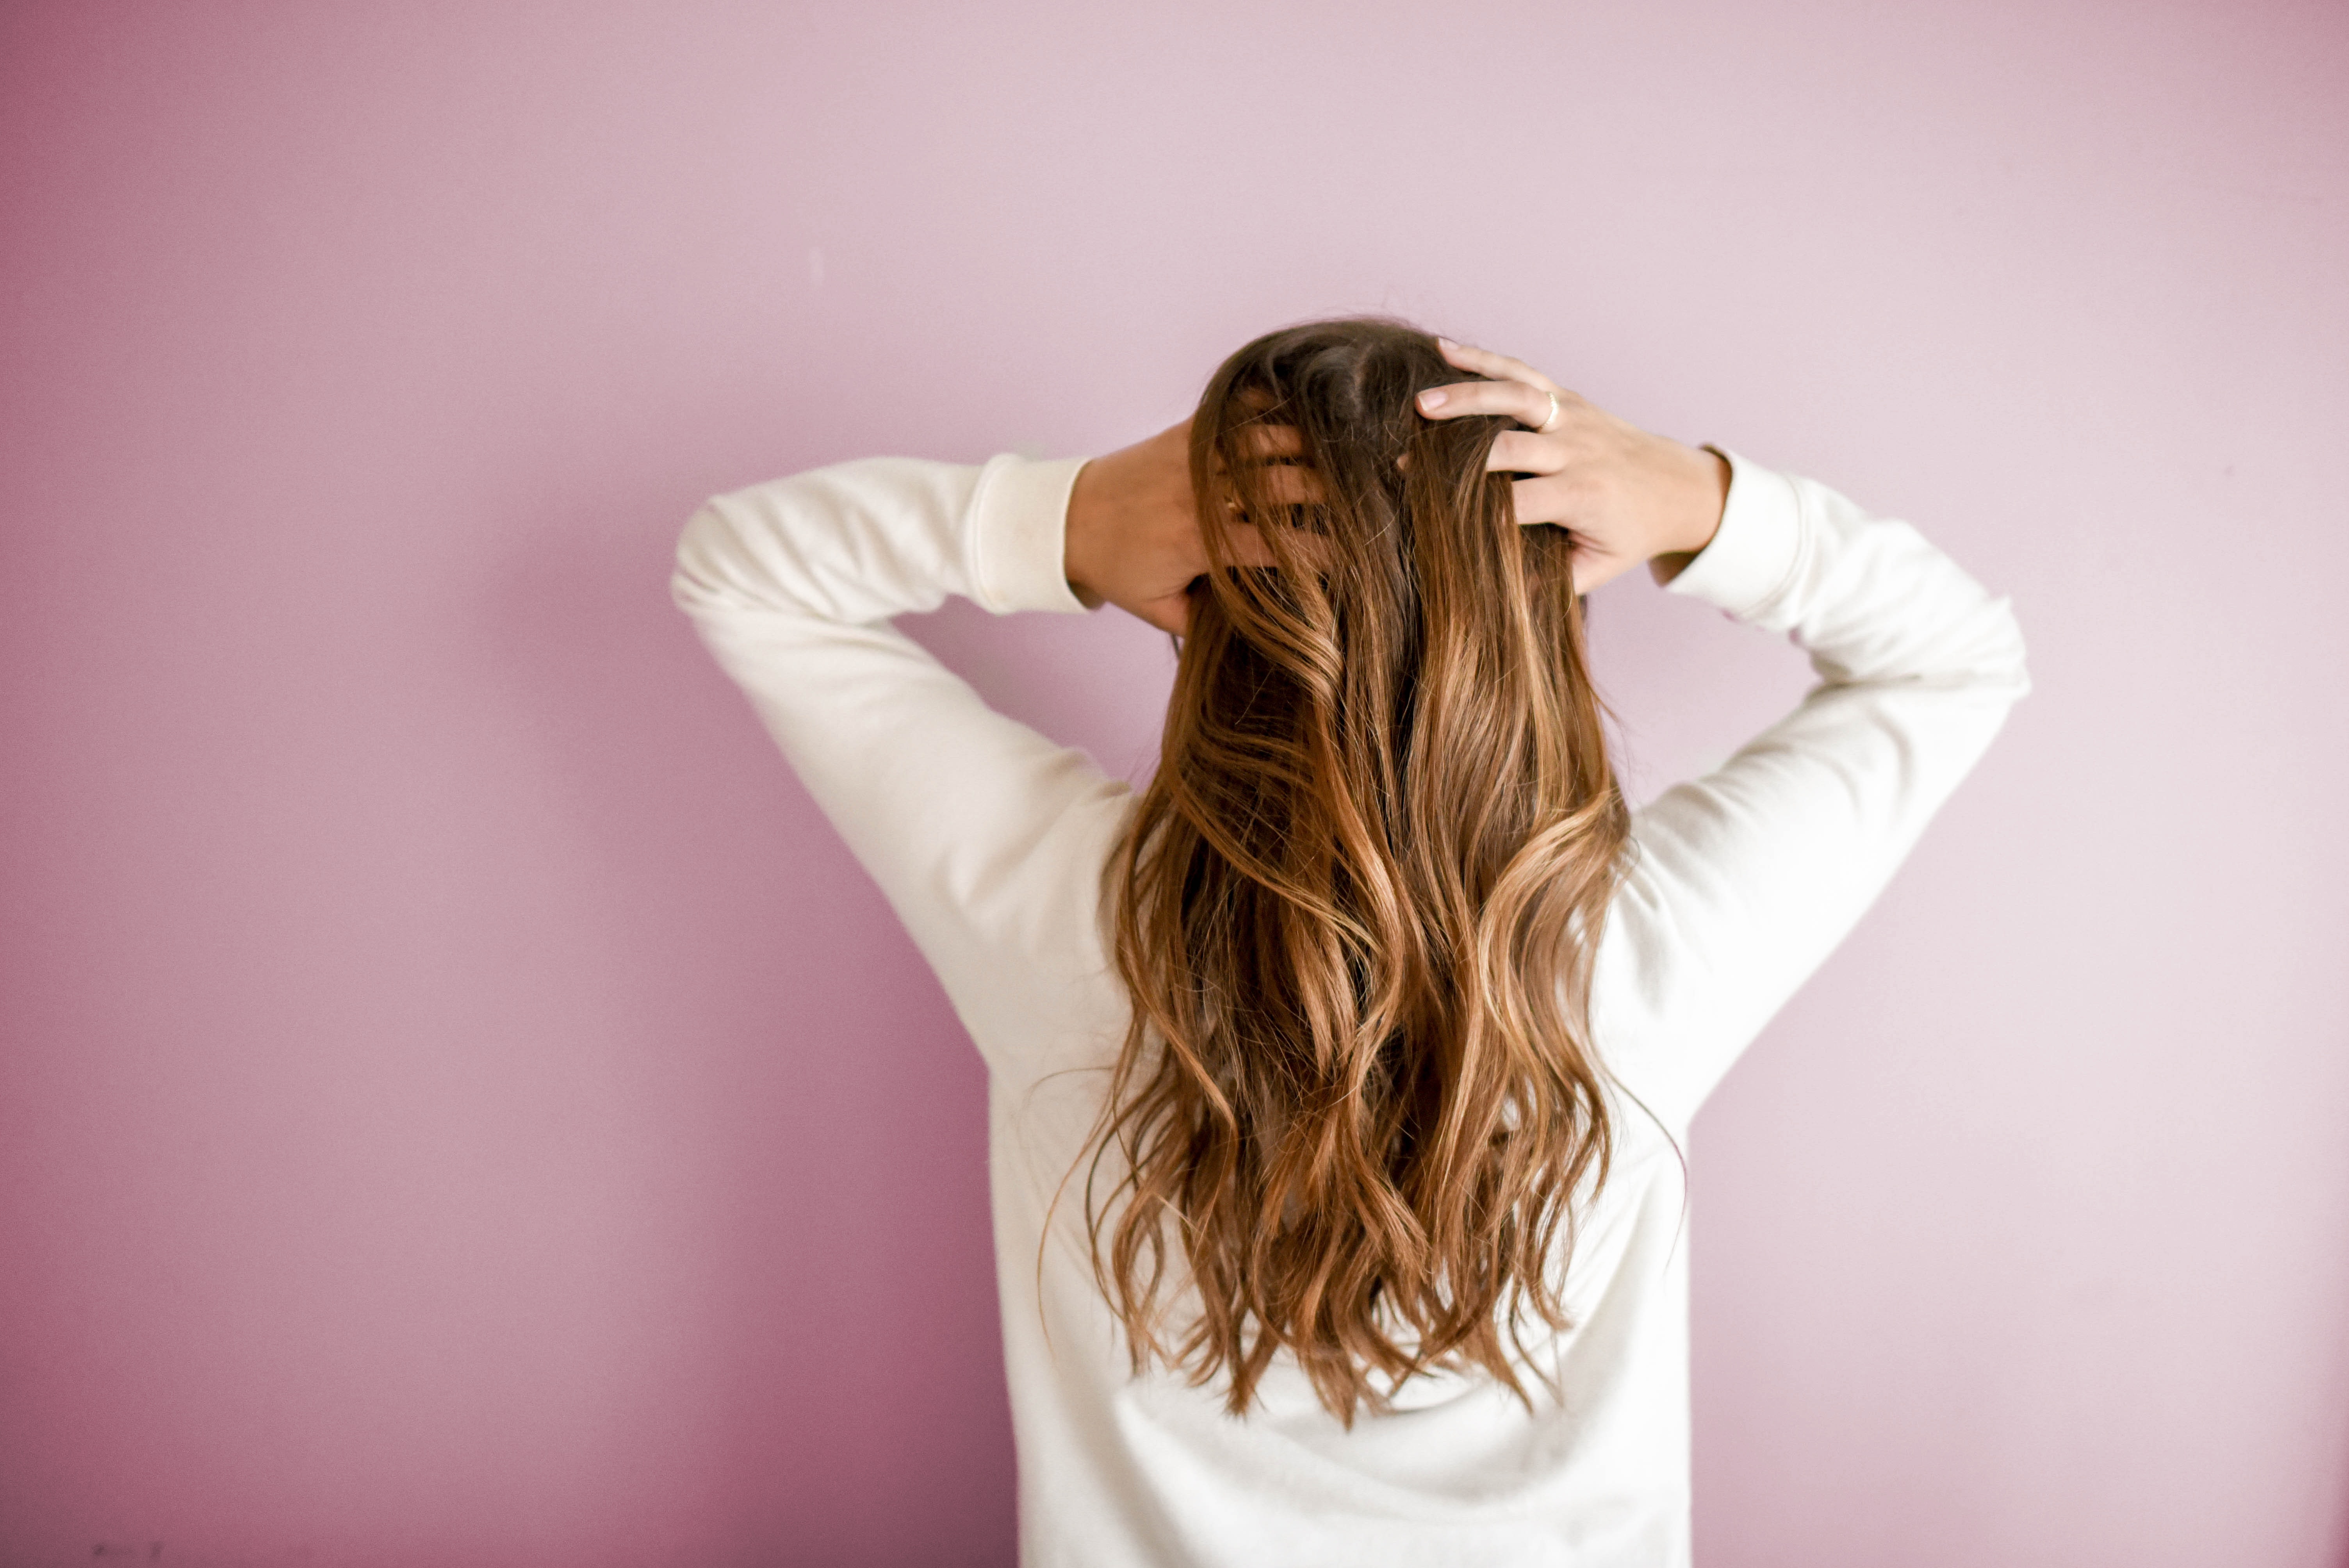 Recenze DonnaHAIR: Jak funguje na vlasy?